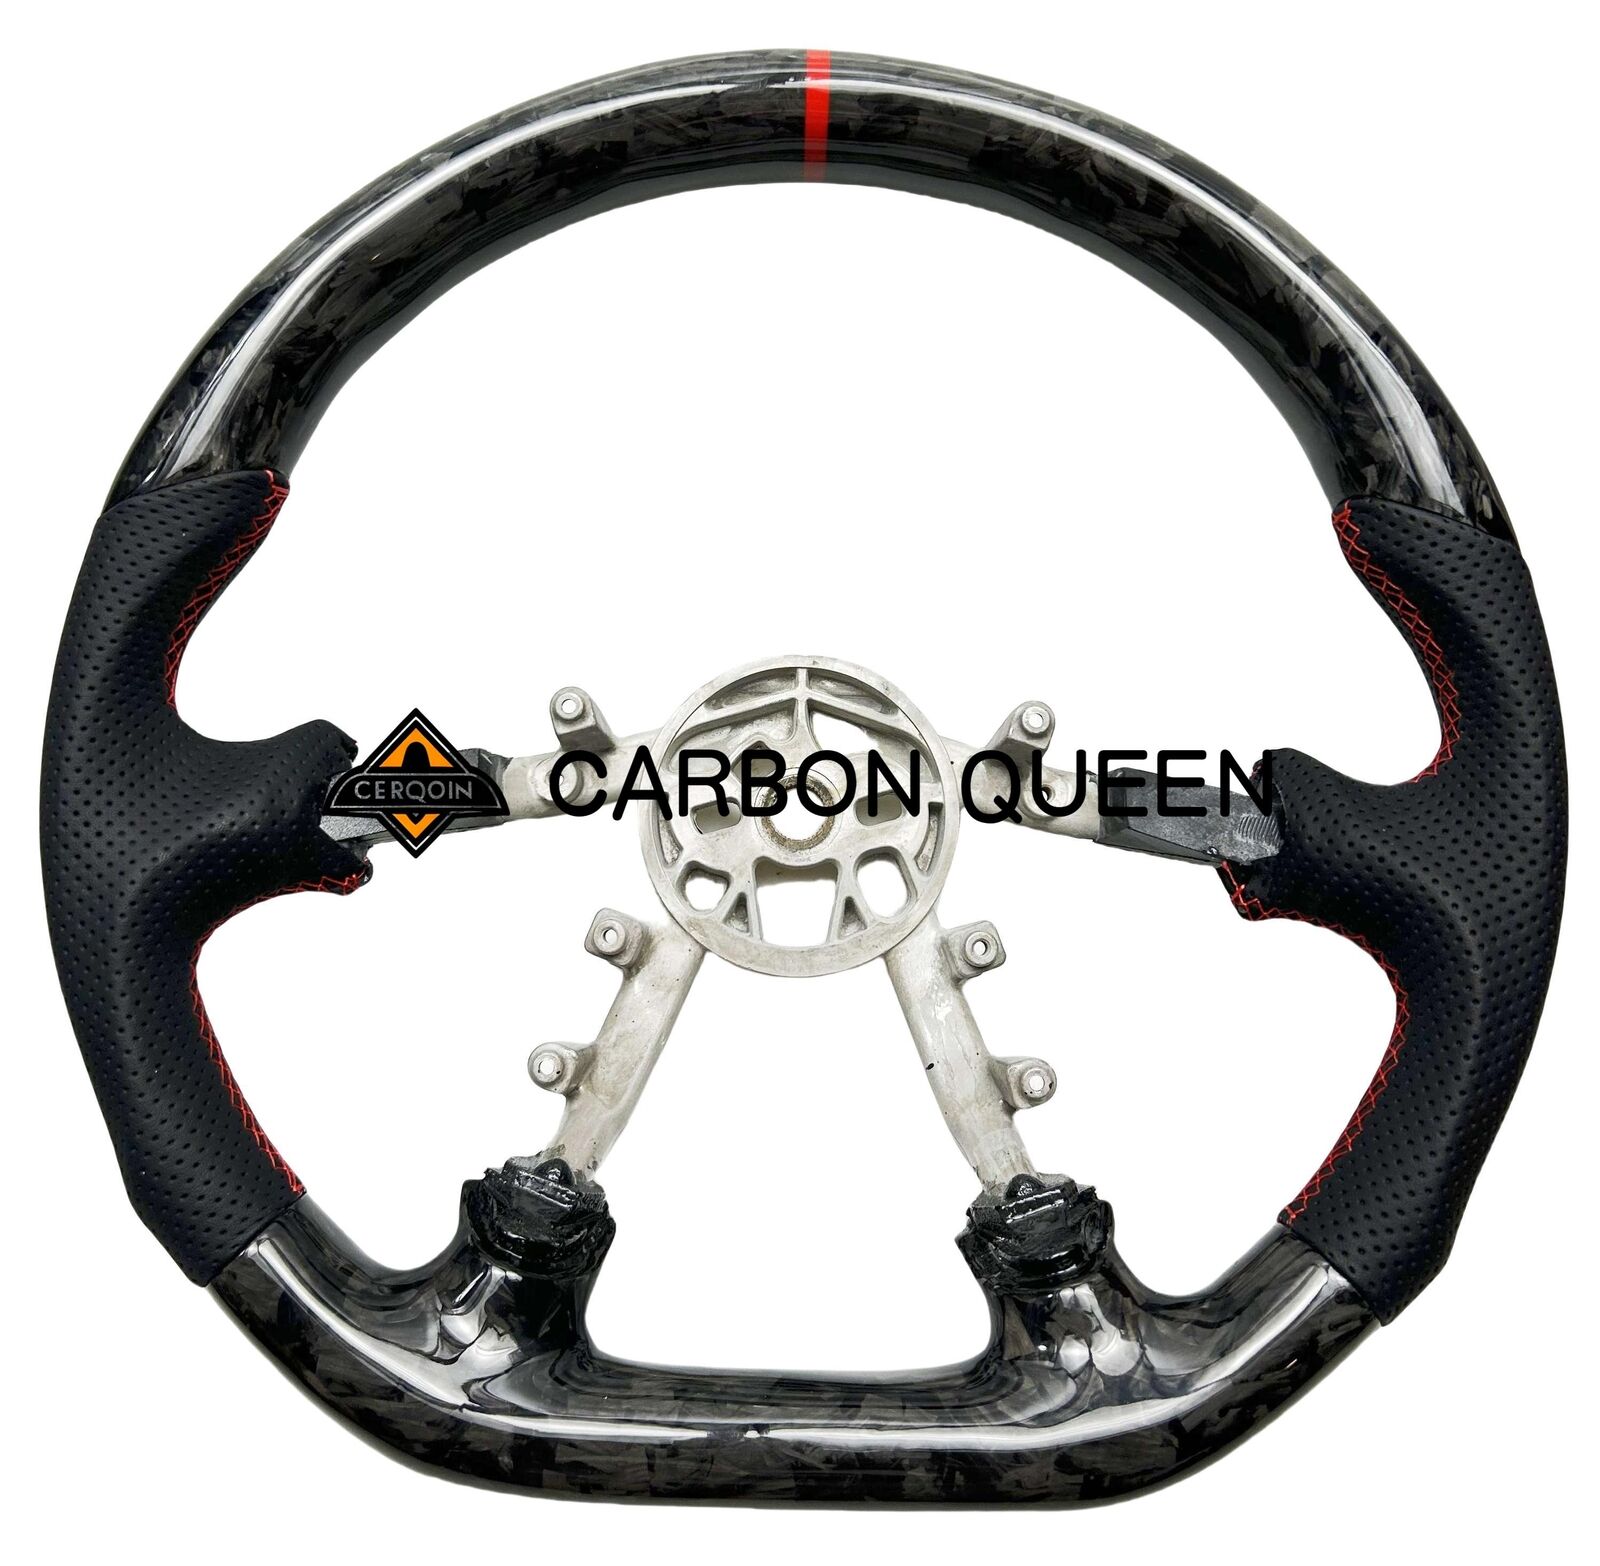 REAL FORGED CARBON FIBER Steering Wheel FOR Chevrolet Corvette C5 Z06 97-04YEARS